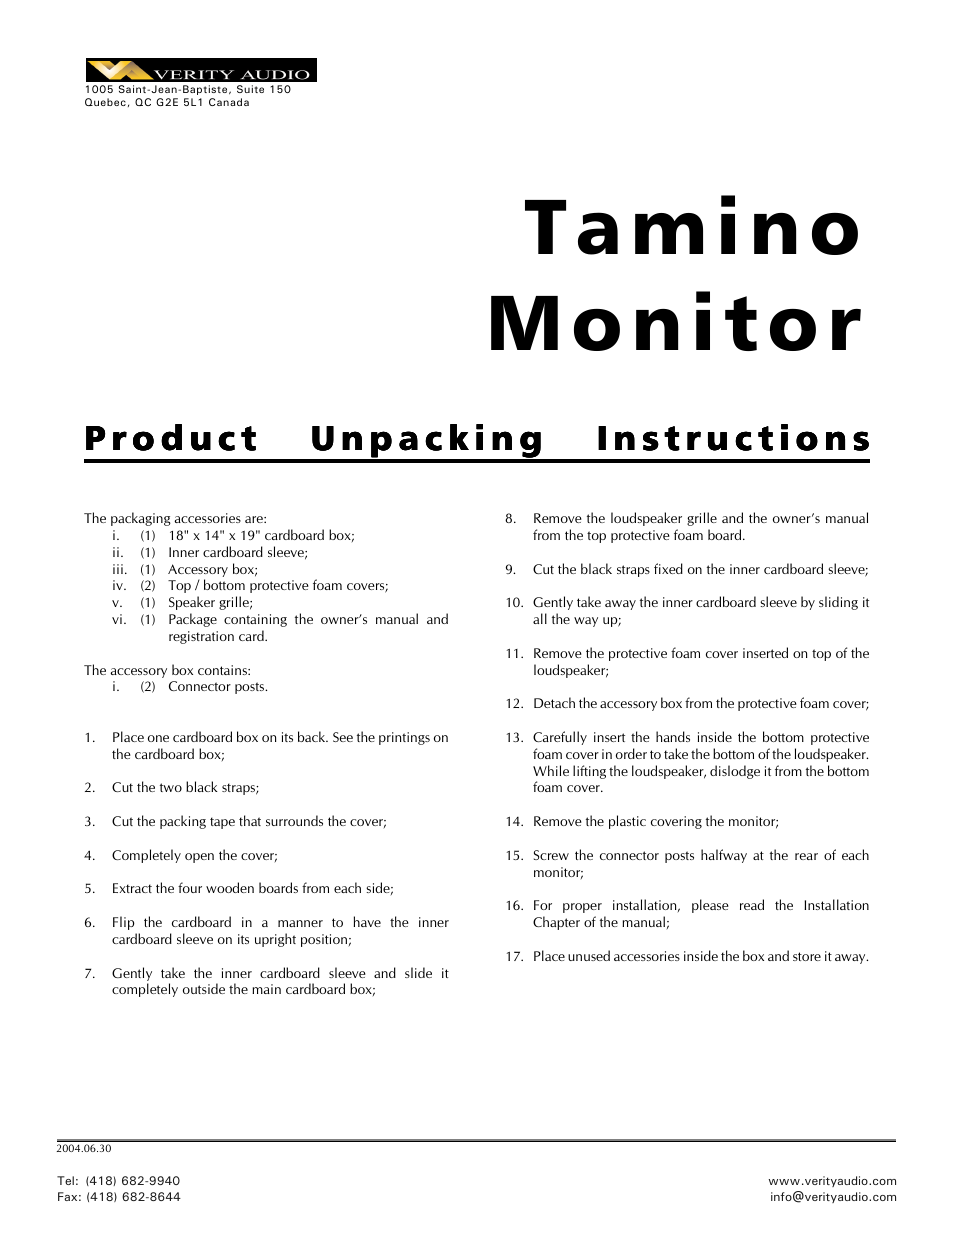 Tamino Monitor - Packing / Unpacking Instructions